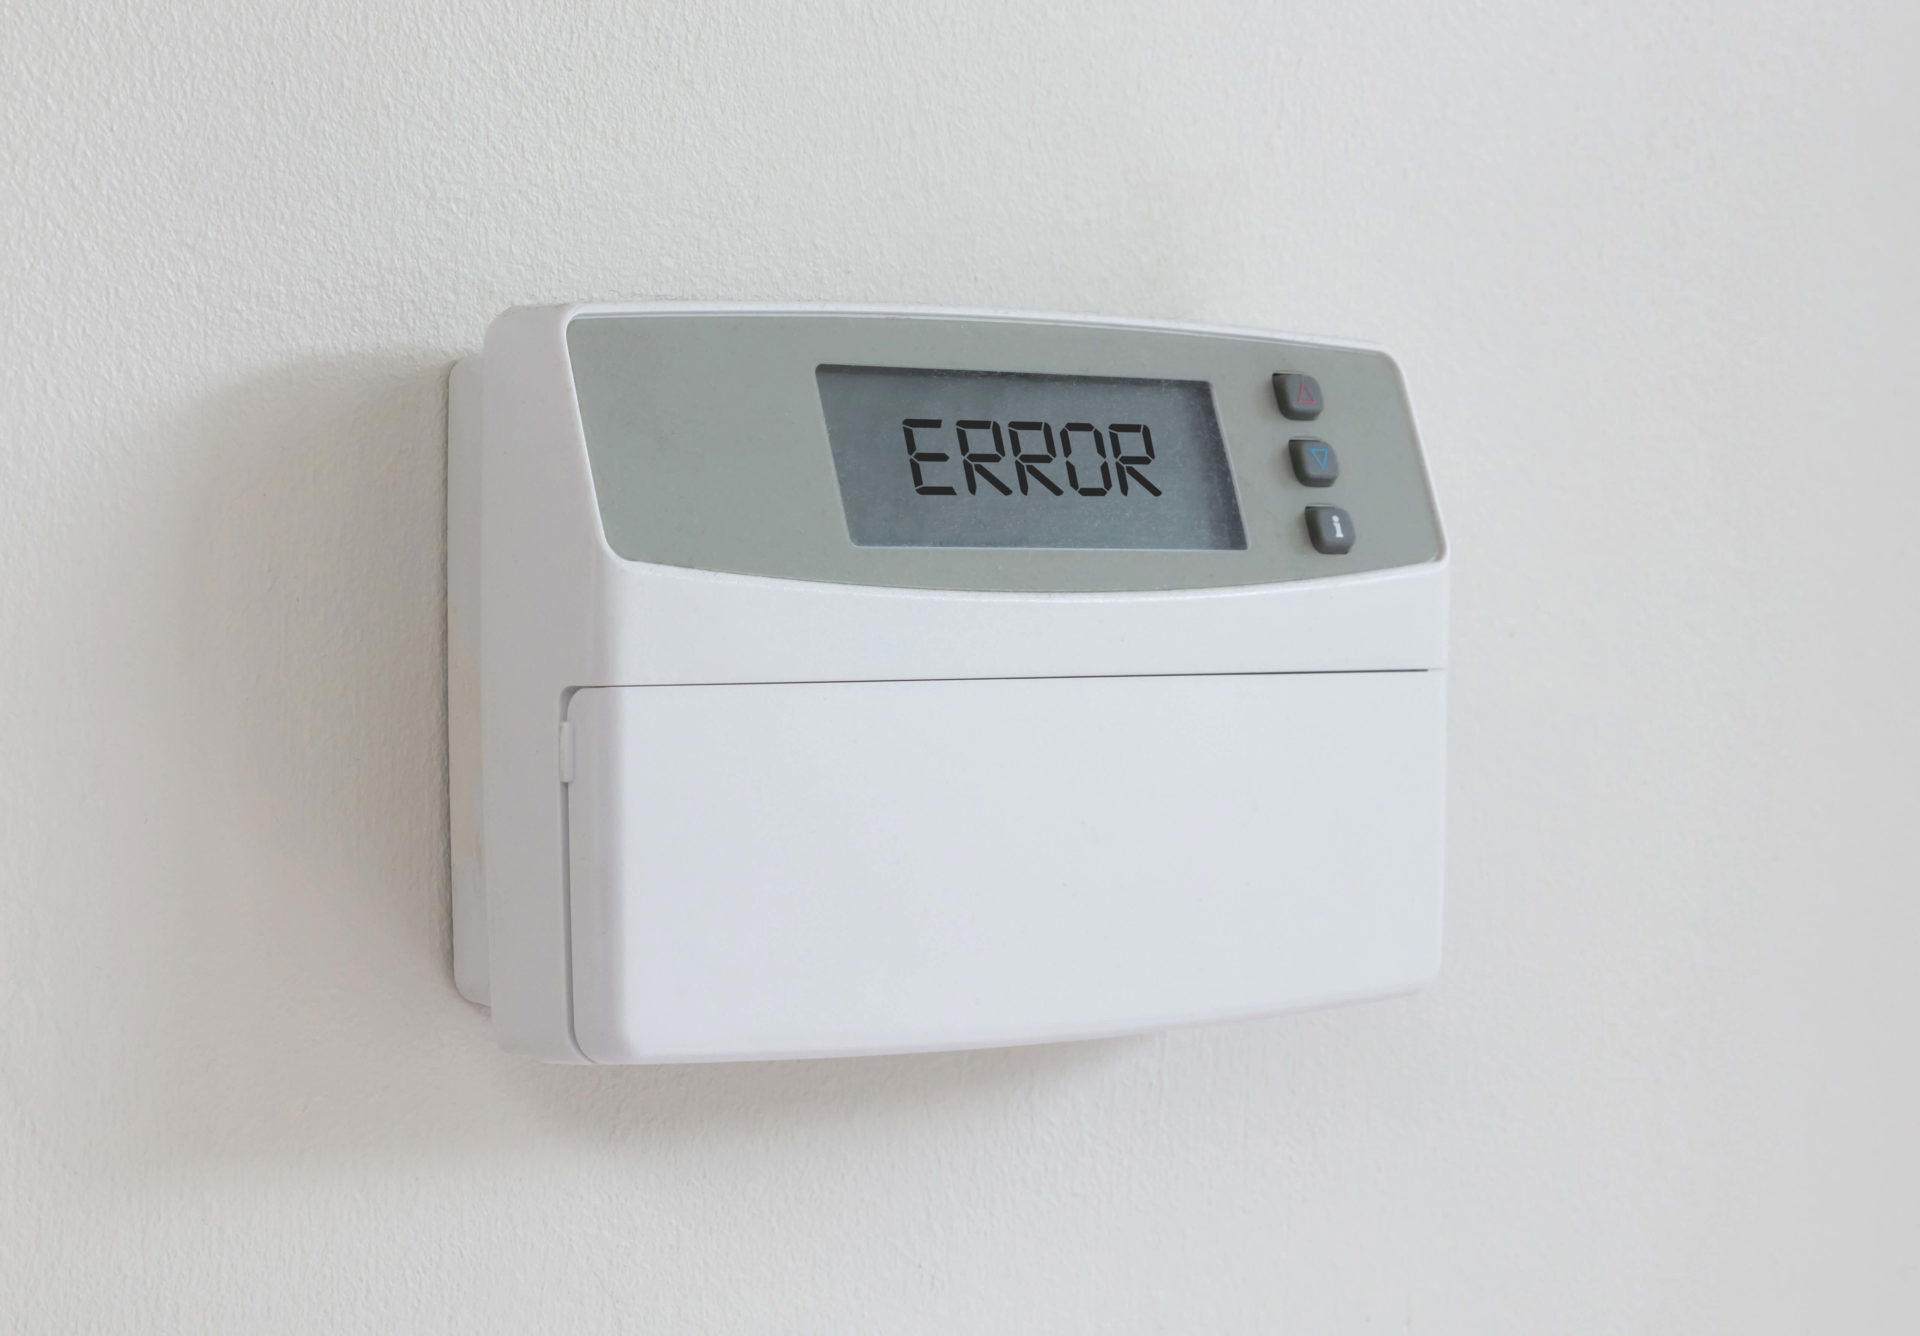 Thermostat error